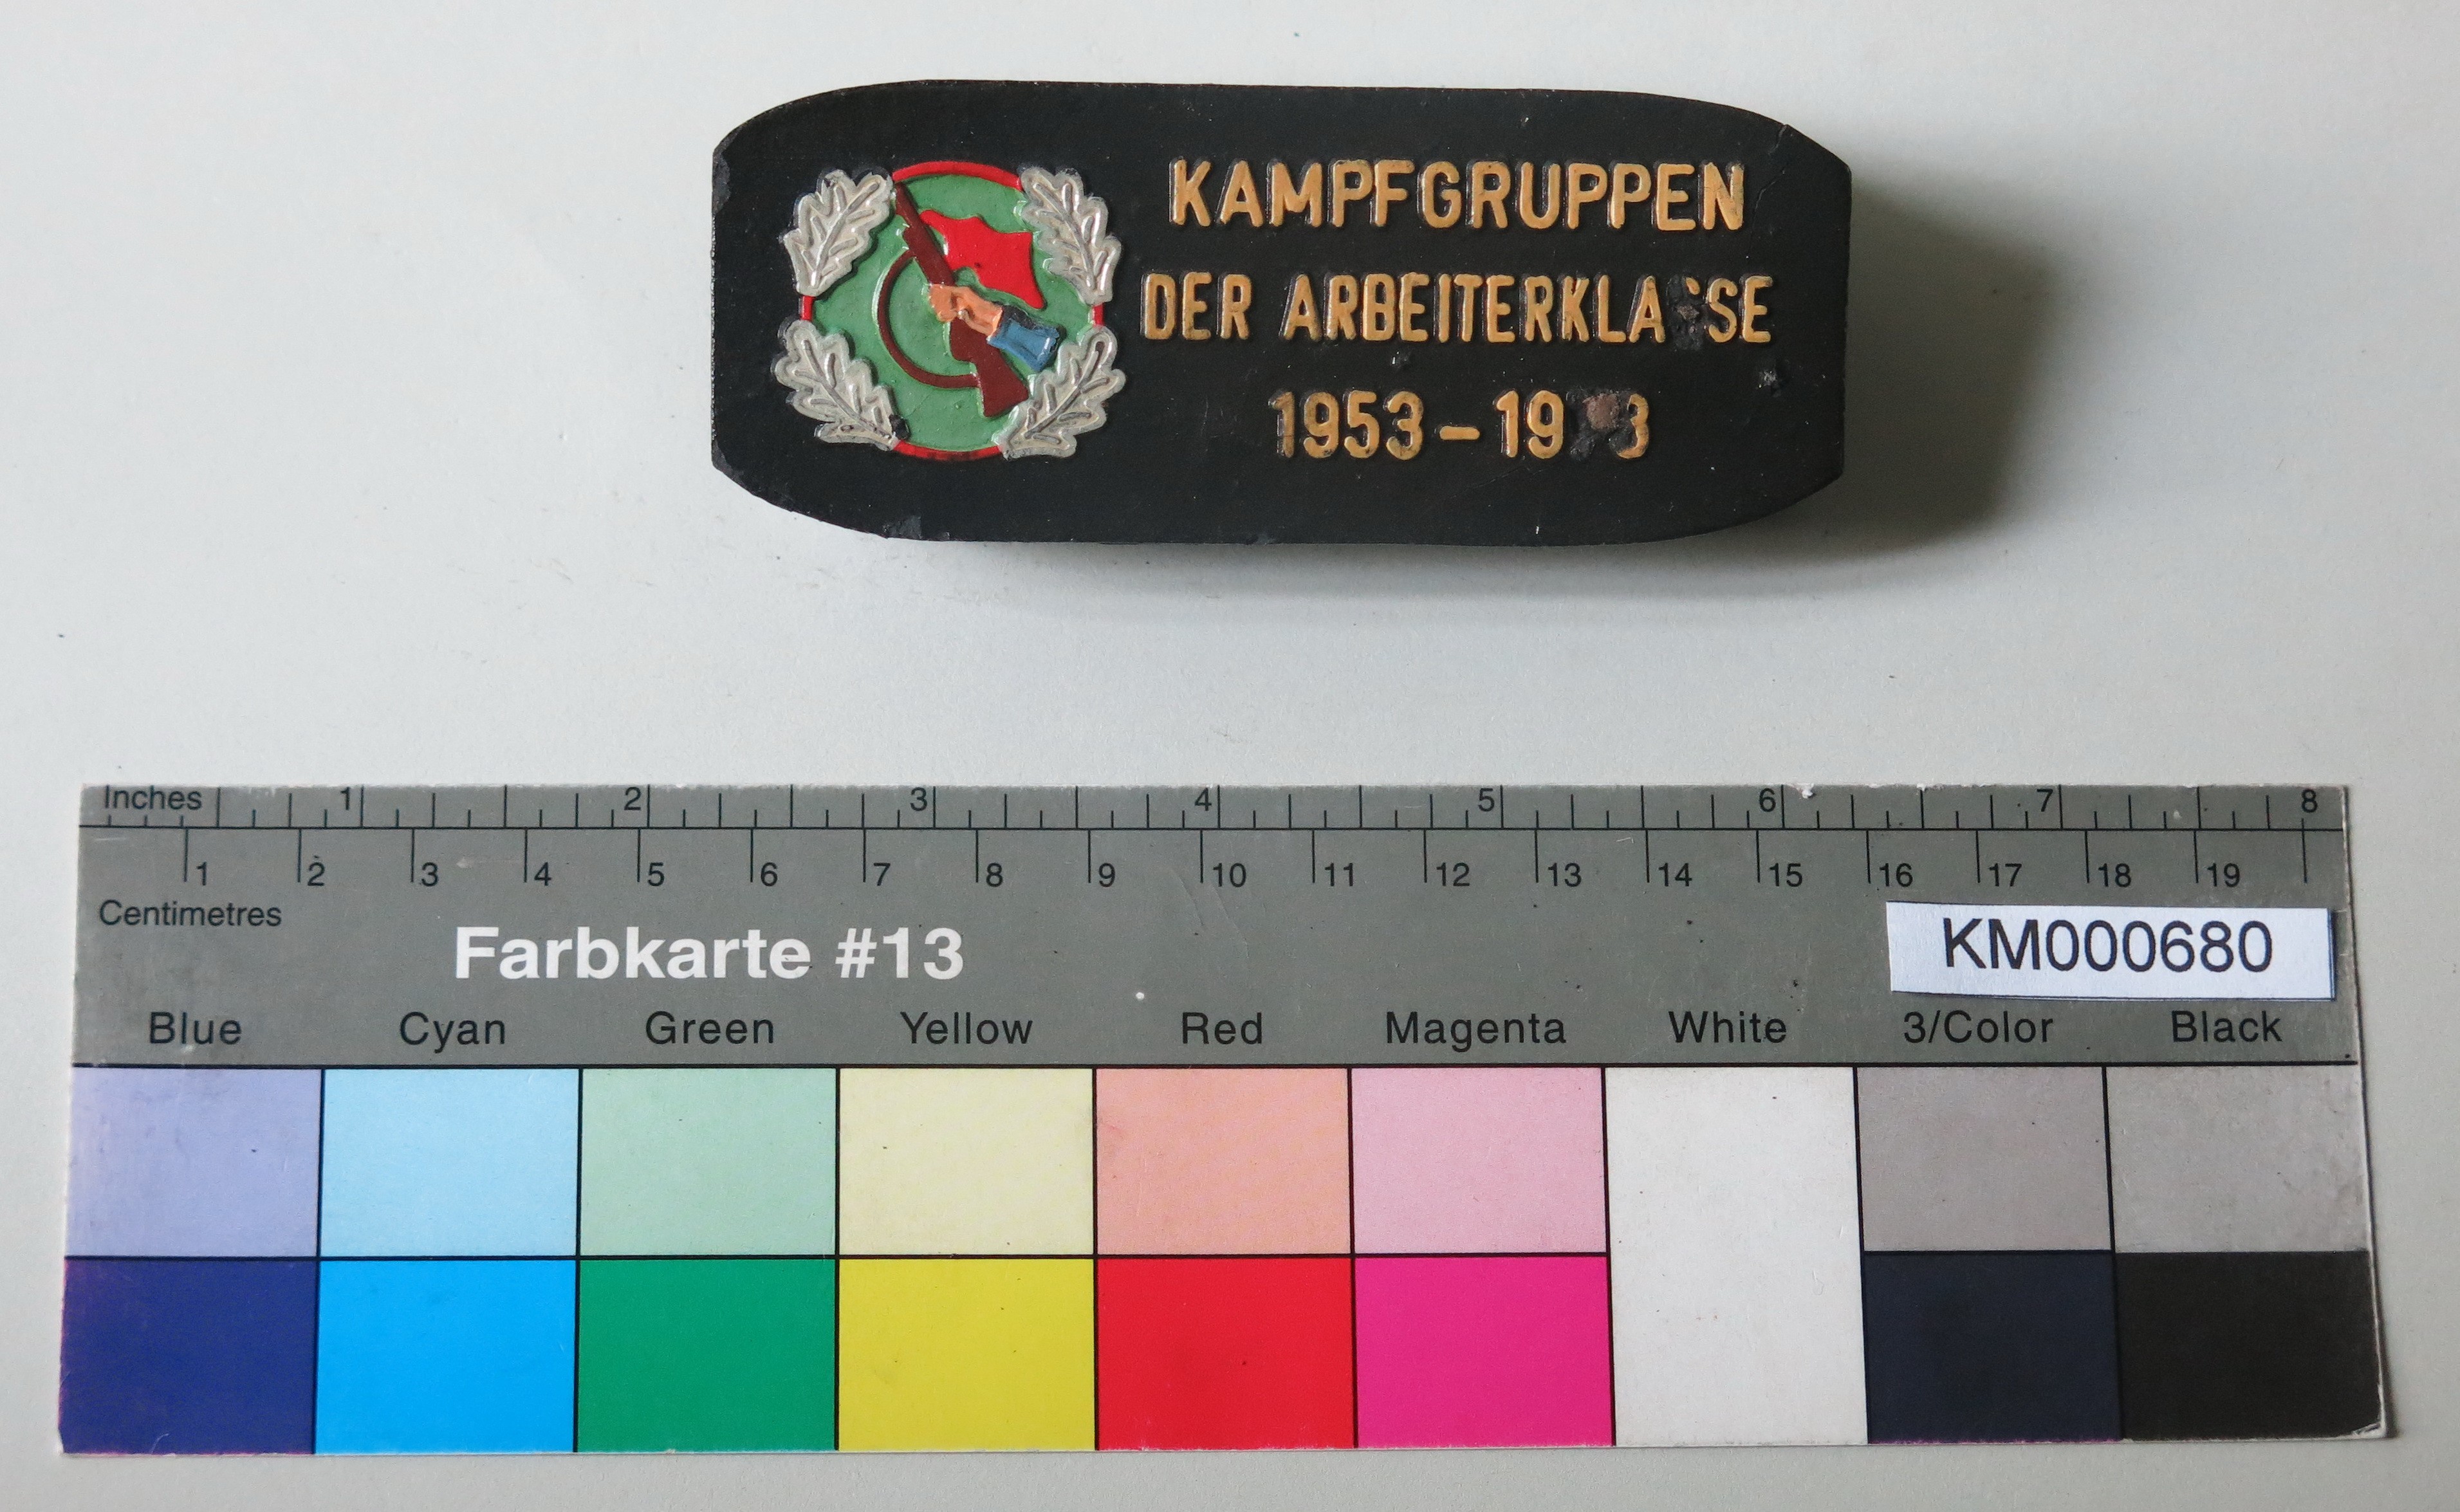 Zierbrikett "KAMPFGRUPPEN DER ARBEITERKLASSE 1953-1973" (Energiefabrik Knappenrode CC BY-SA)